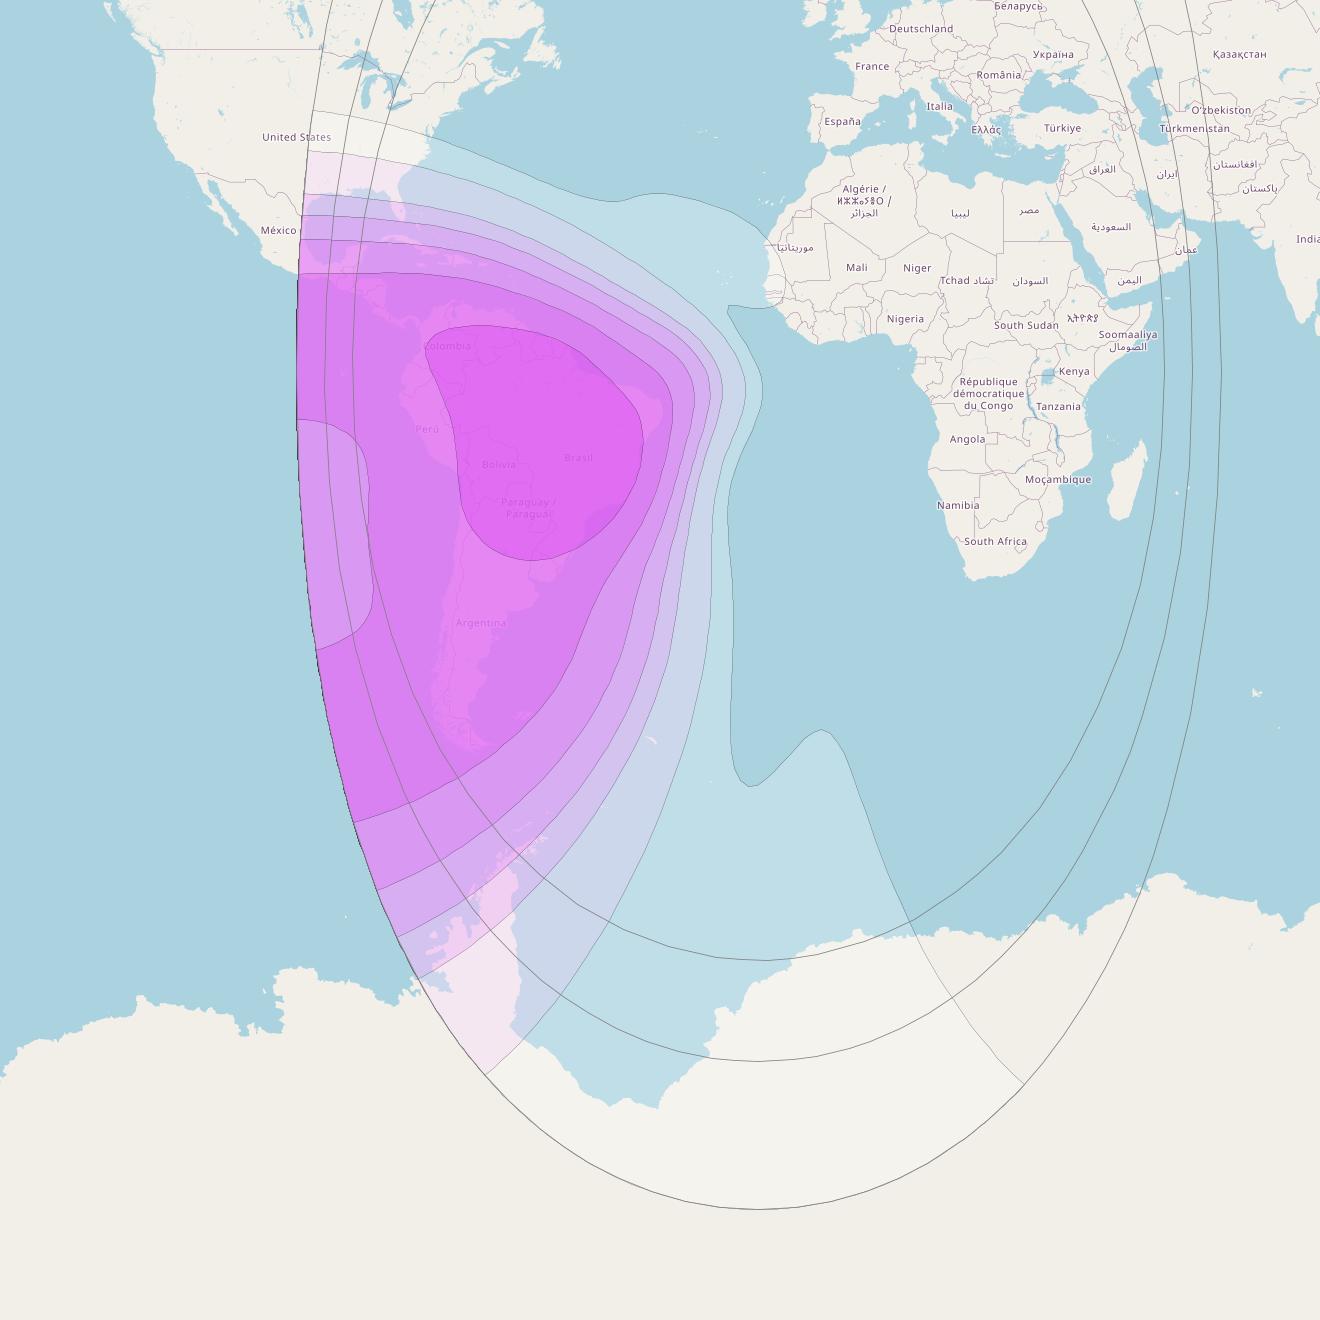 Intelsat 37e at 18° W downlink C-band Latin America beam coverage map